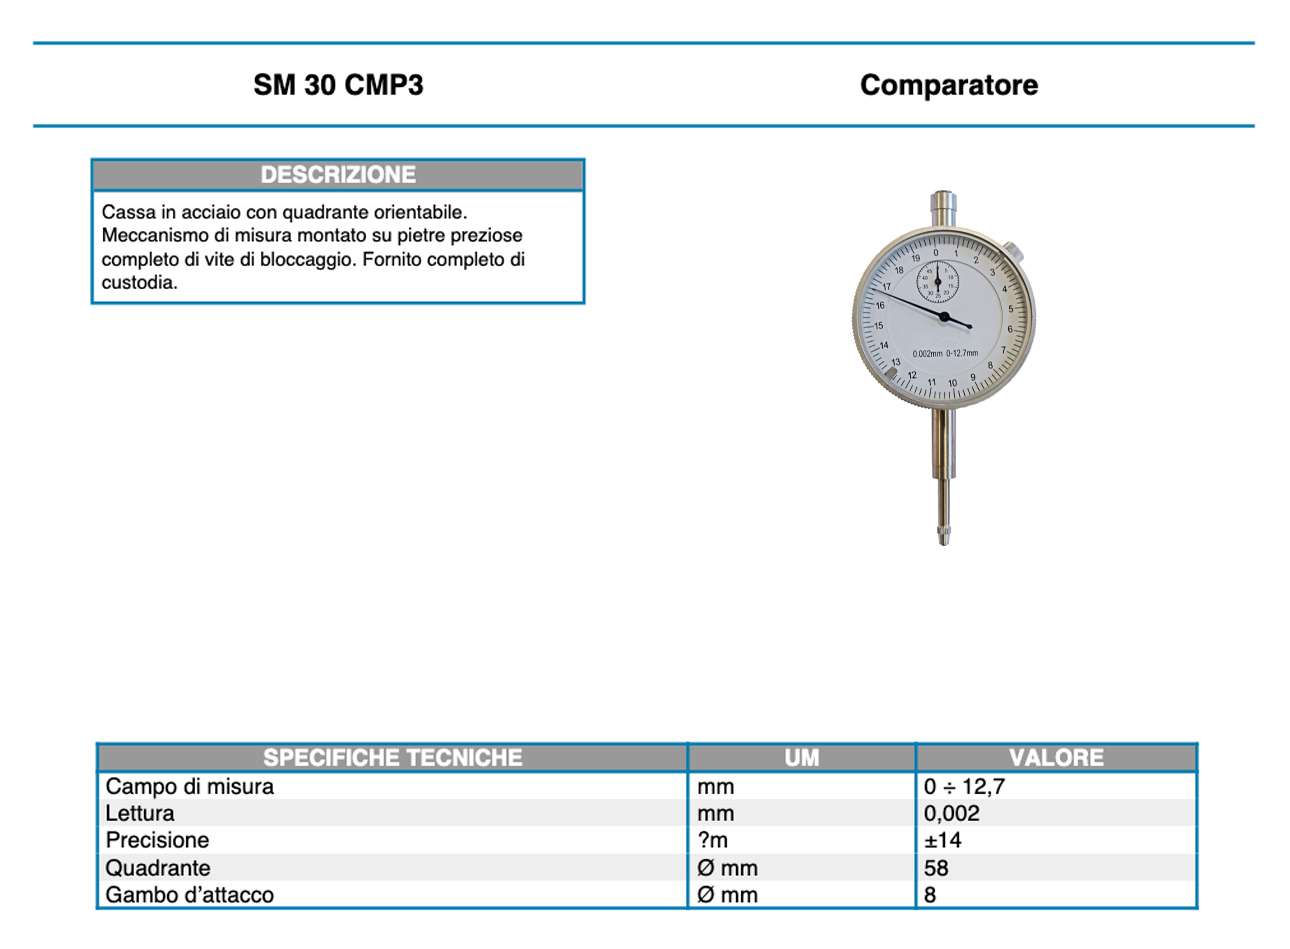 SM 30 CMP3 dati